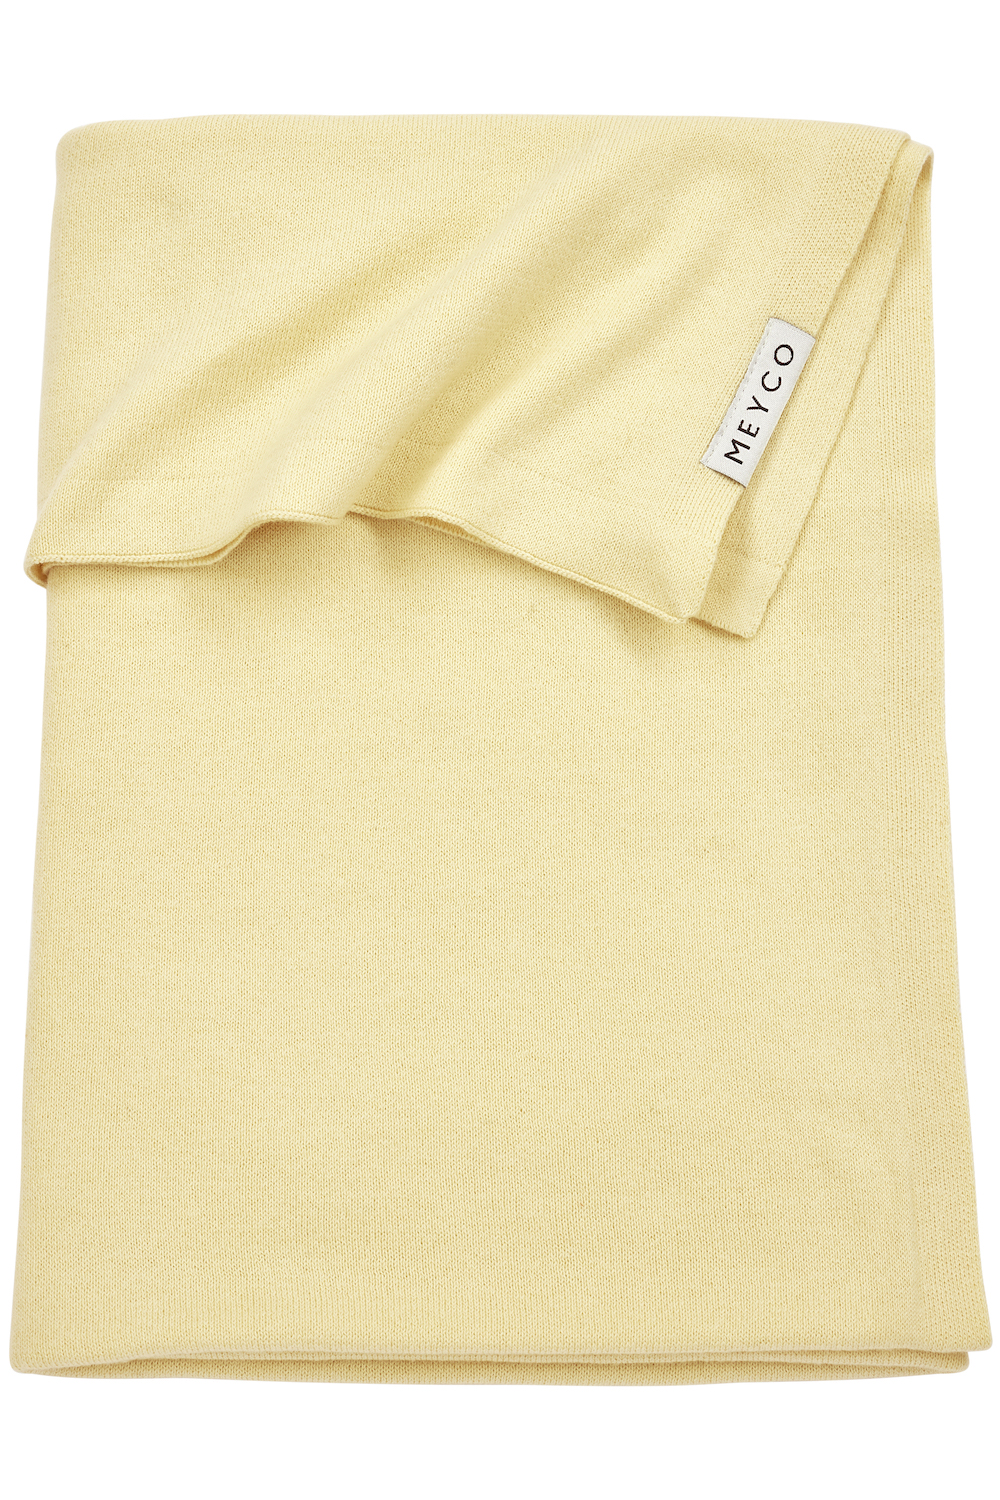 Ledikantdeken Knit Basic - Soft Yellow - 100x150cm